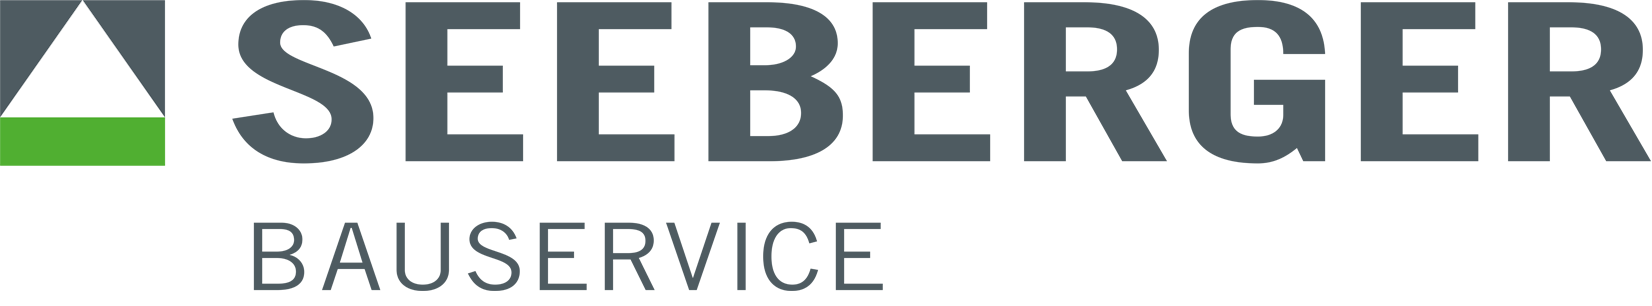 Seeberger_Logo_Bauservice.png